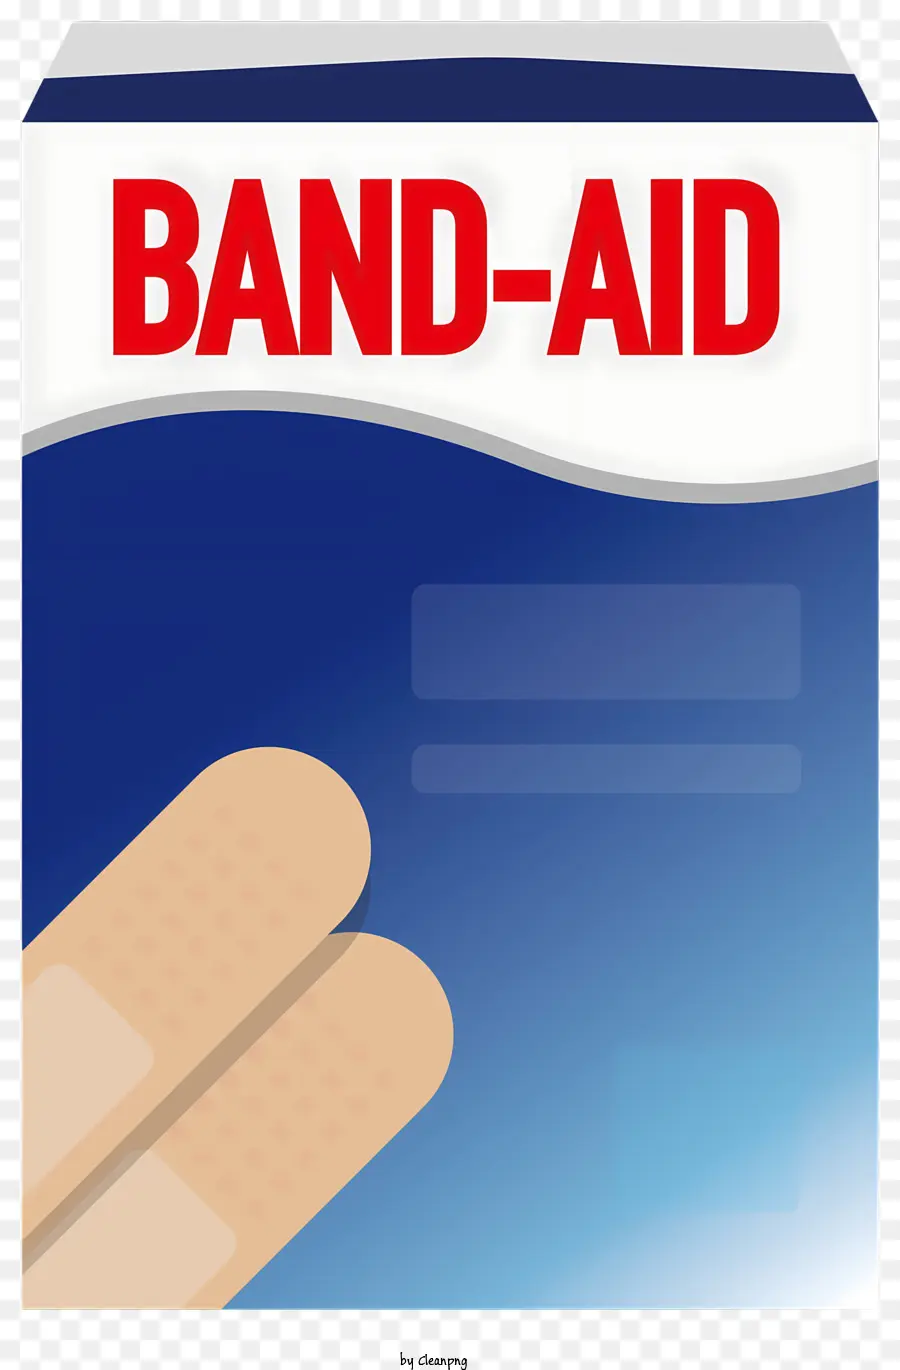 band aid band-aid finger bandage first aid medical supplies